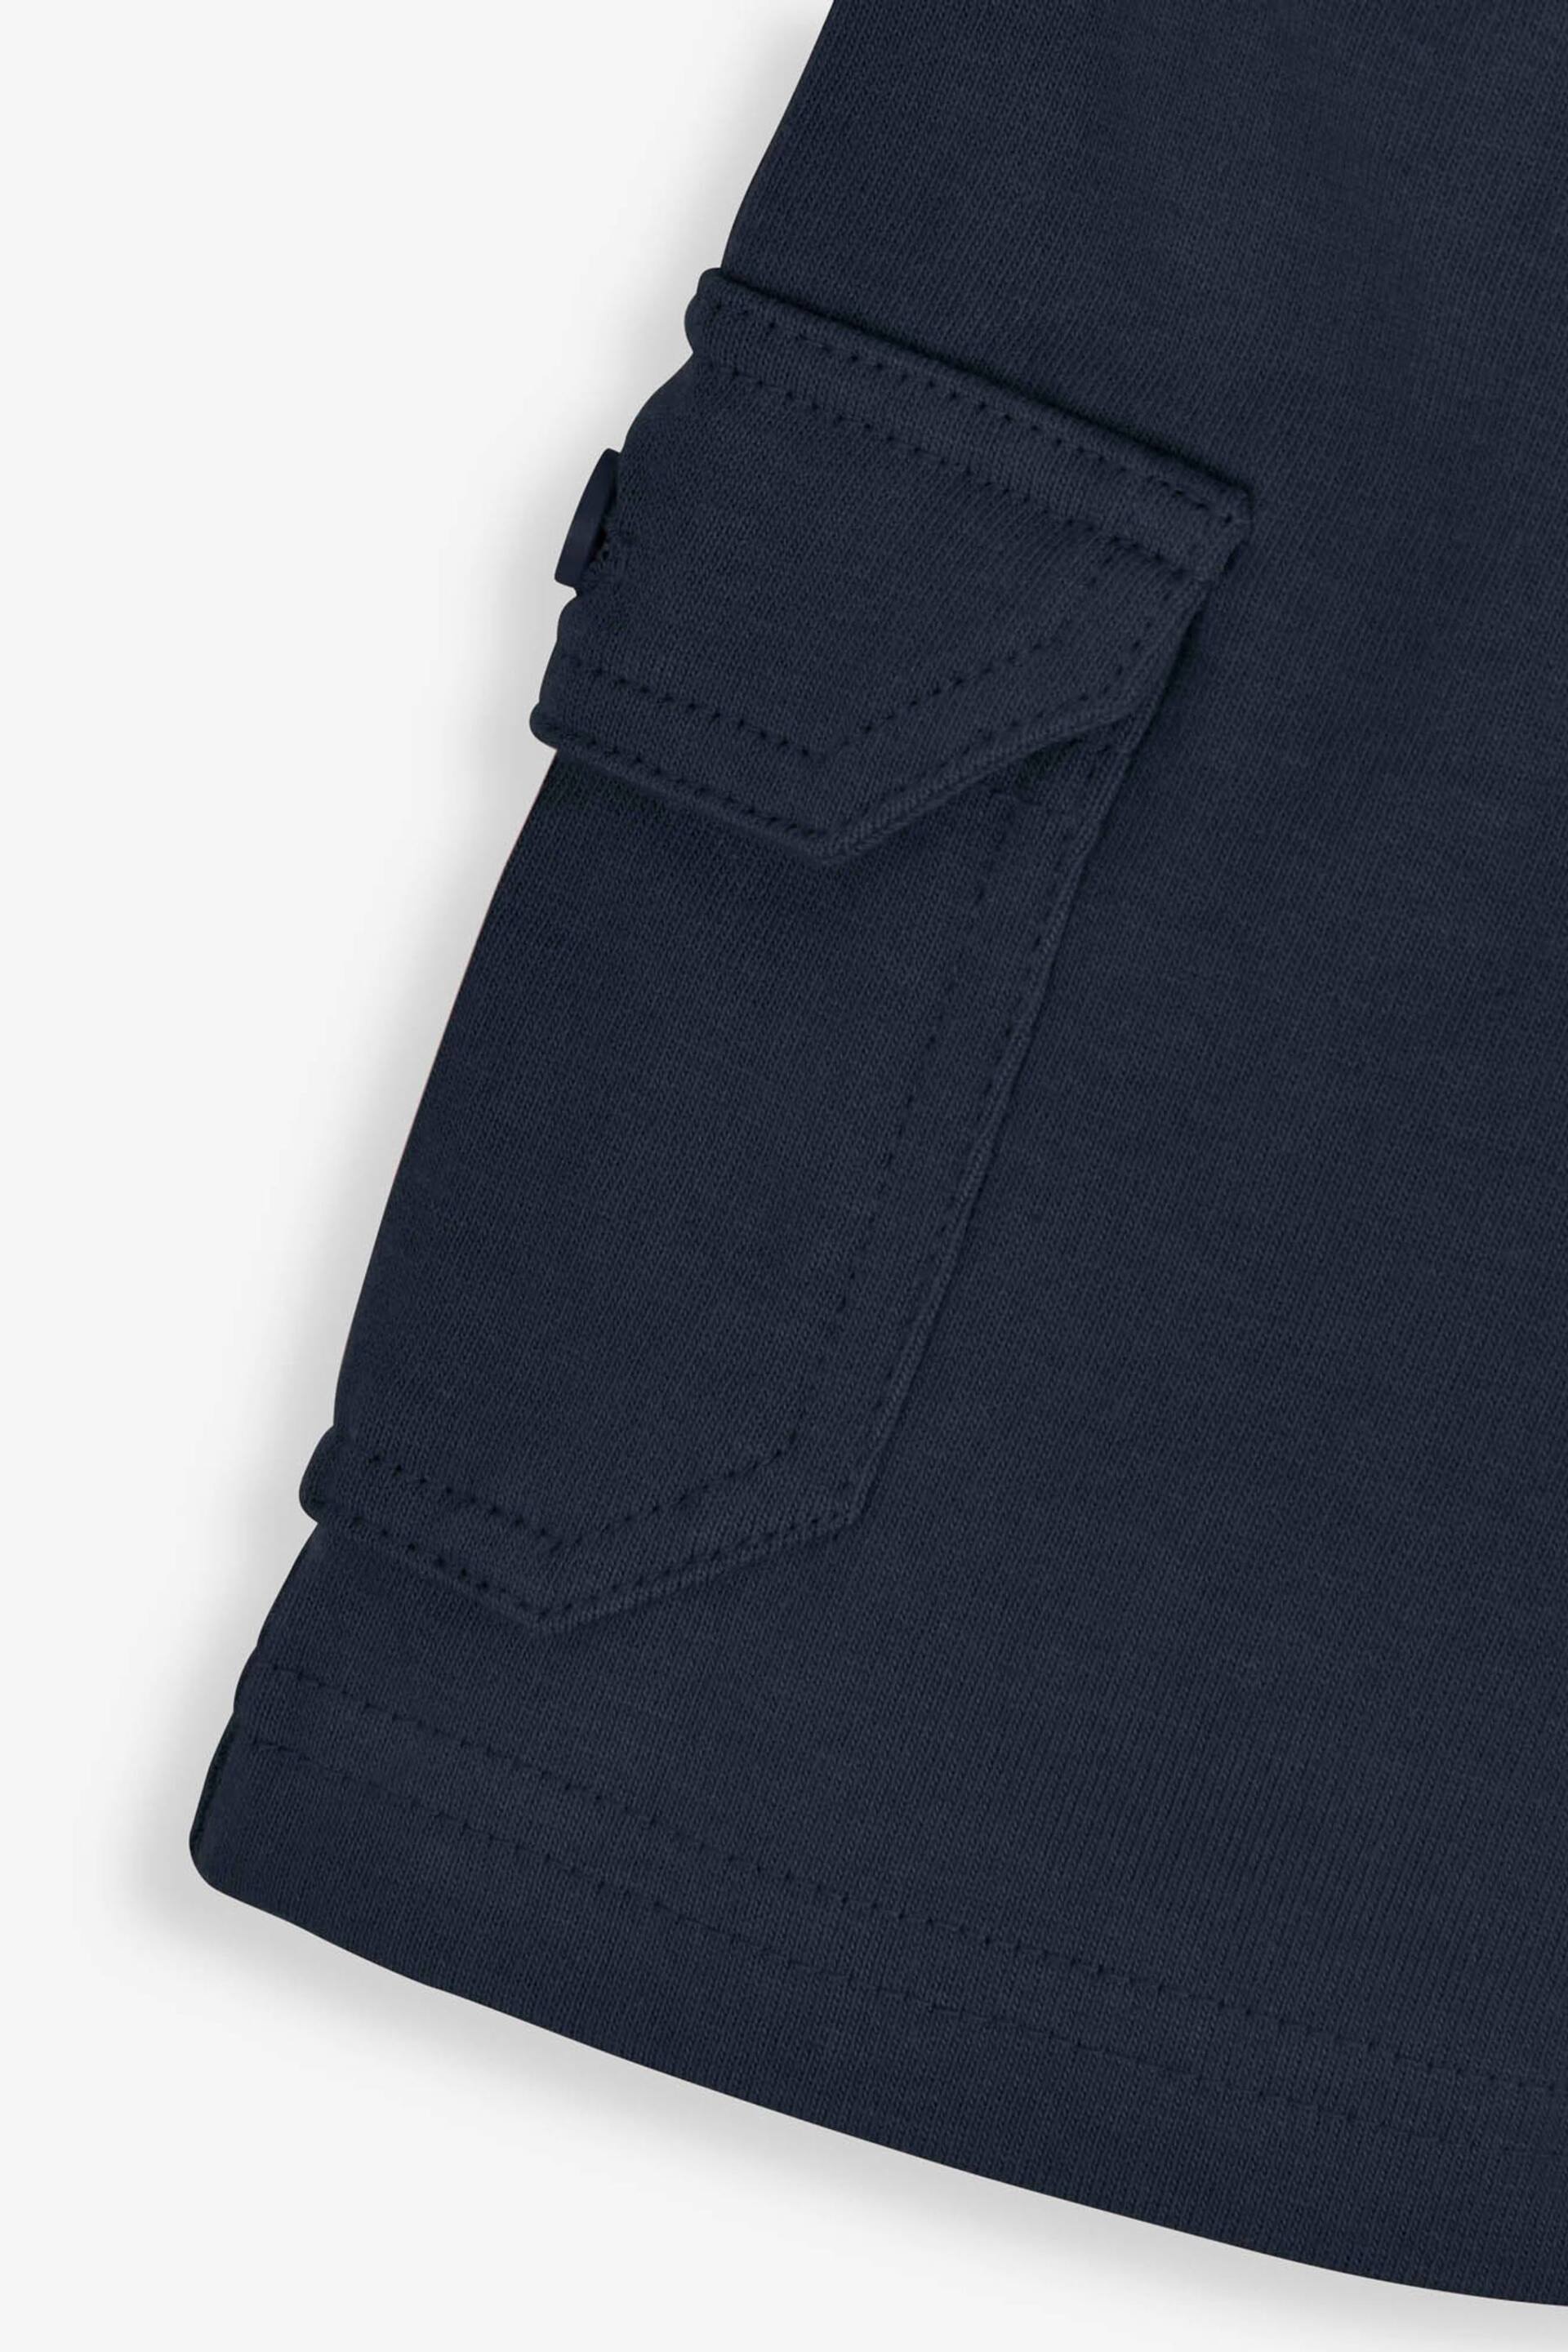 JoJo Maman Bébé Indigo Blue 2-Pack Jersey Cargo Shorts - Image 5 of 6